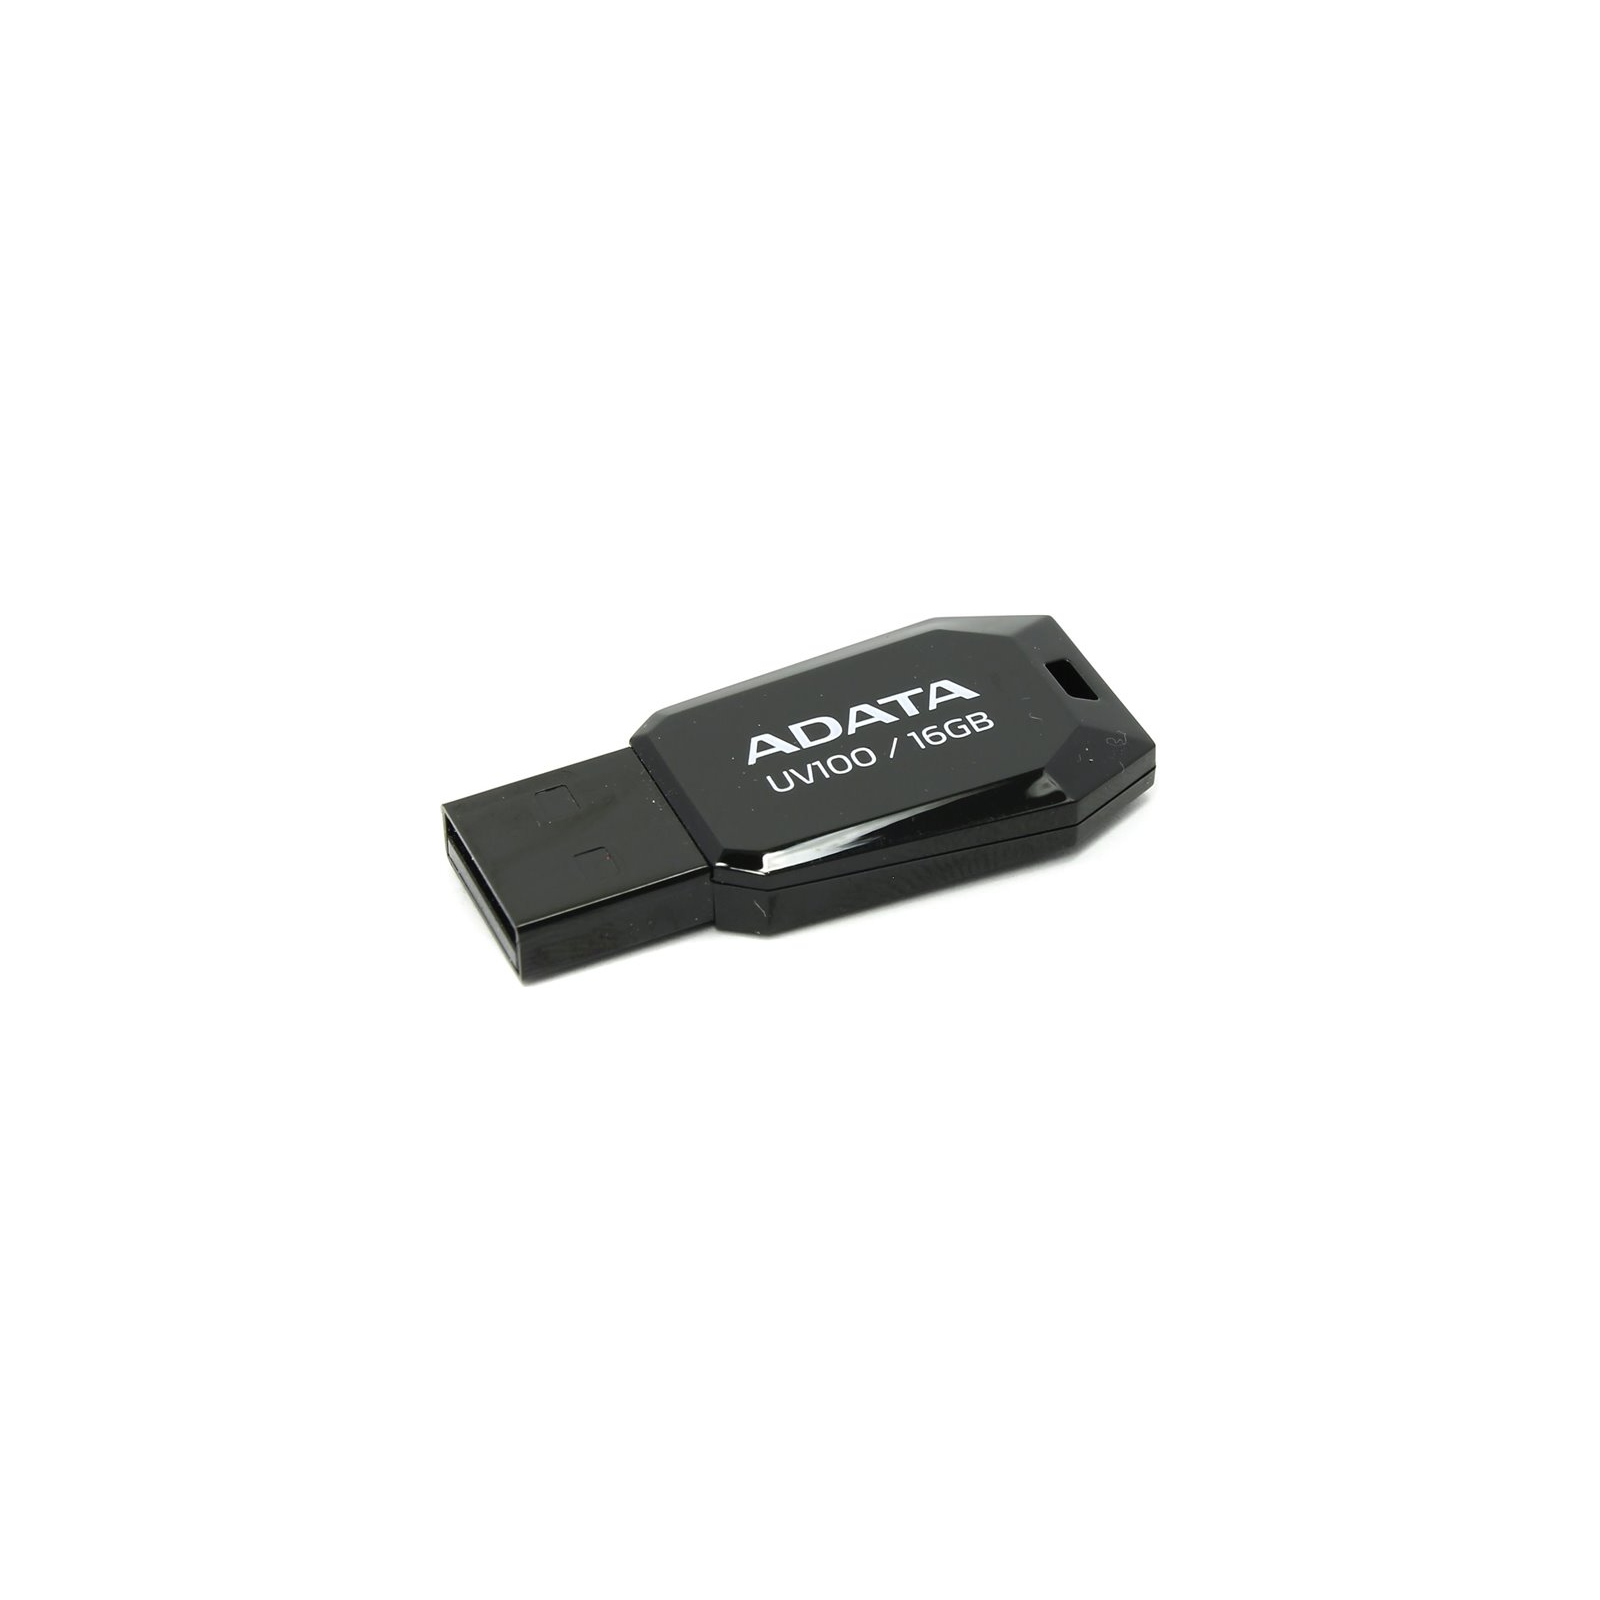 USB флеш накопитель ADATA 16Gb UV100 Blue USB 2.0 (AUV100-16G-RBL) изображение 2